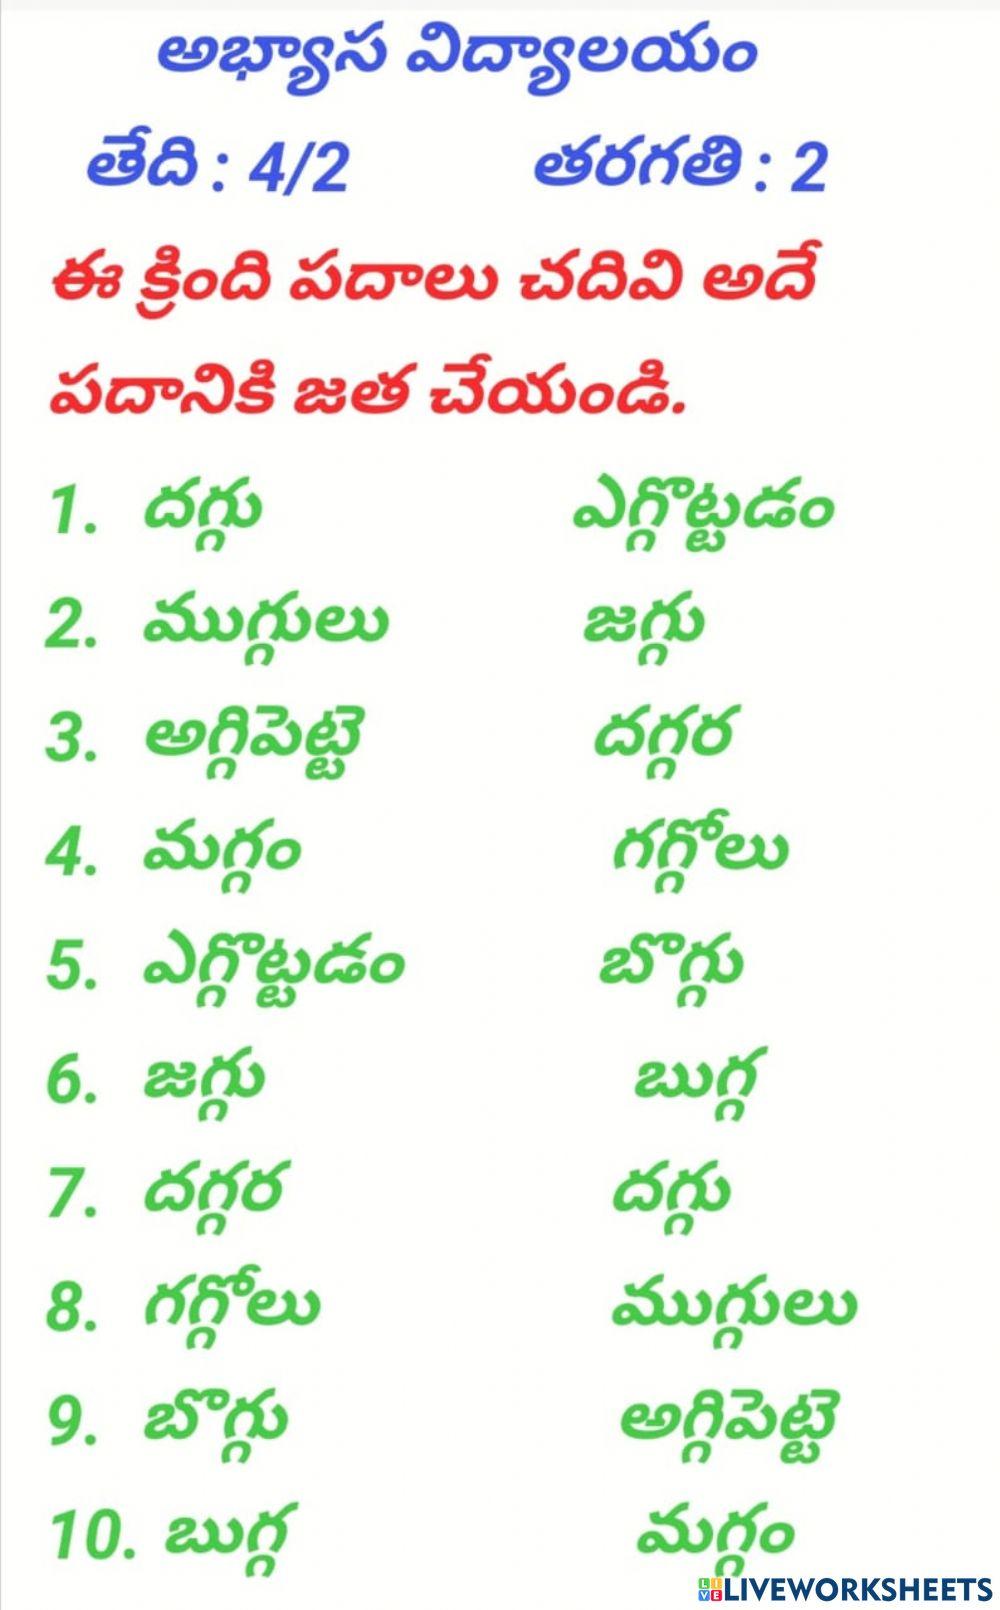 Telugu sheet